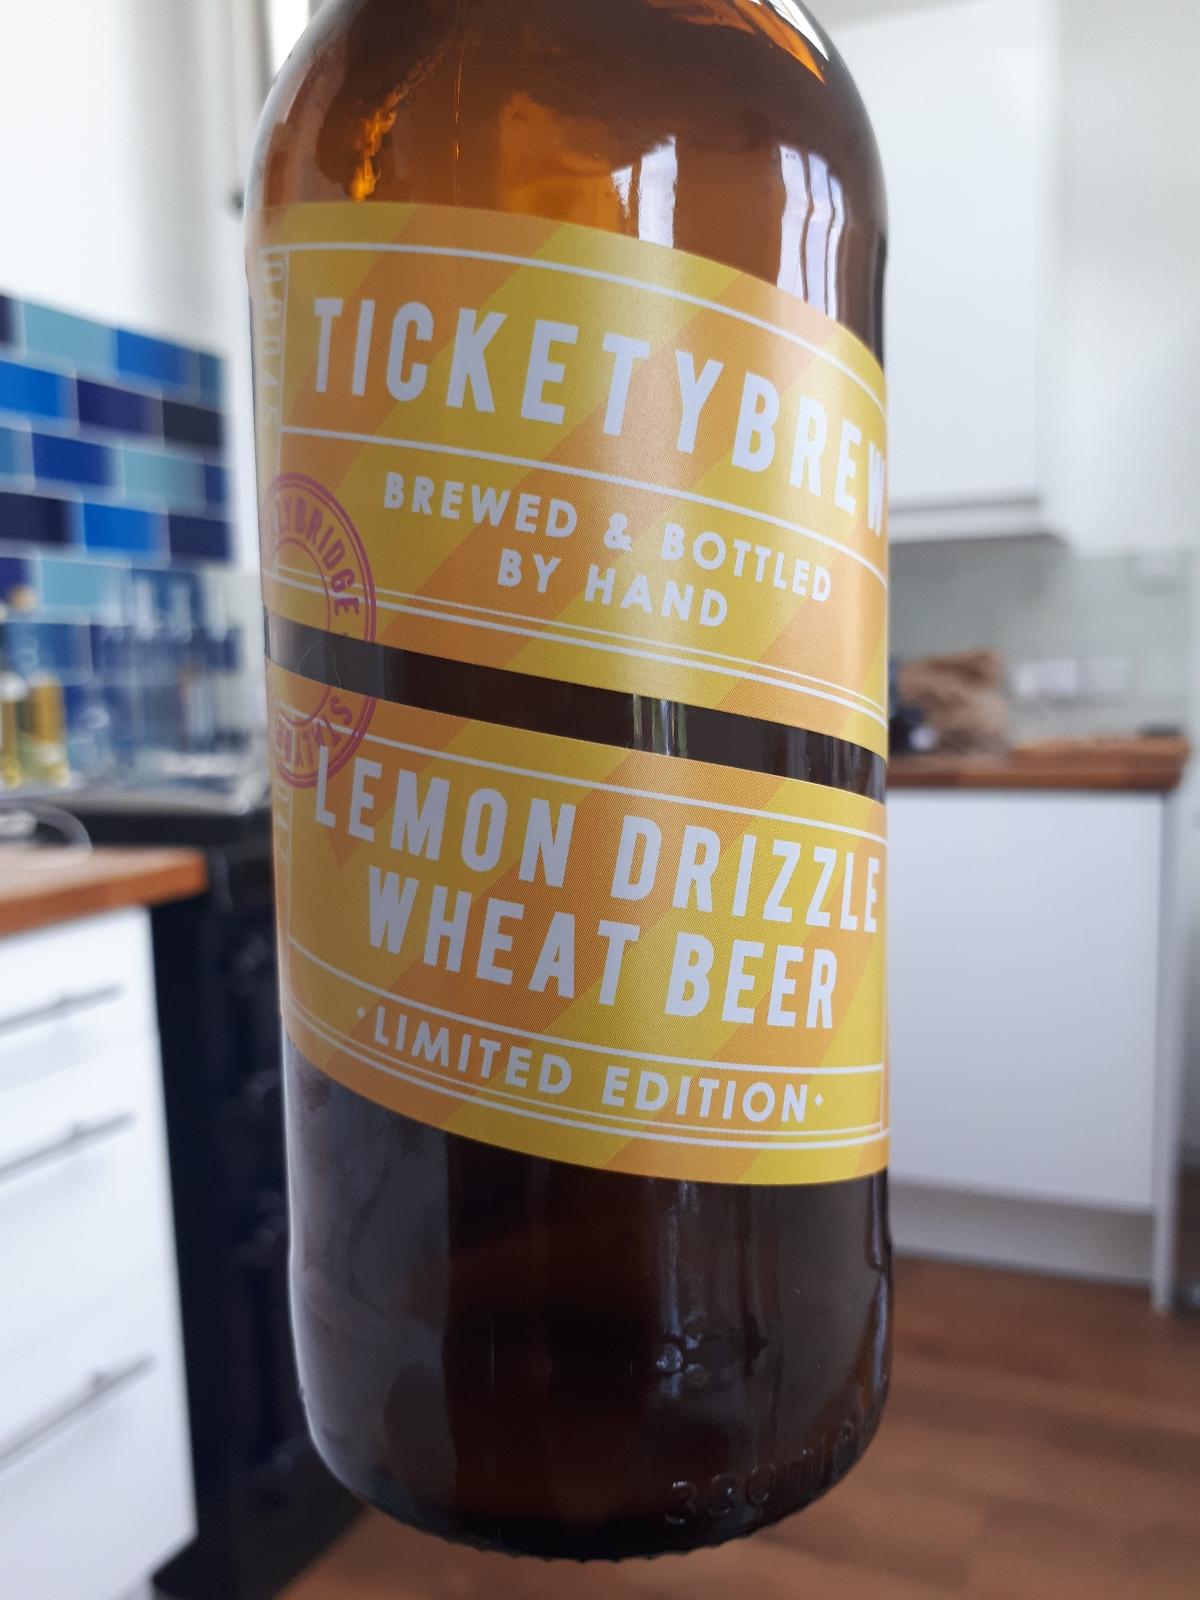 Lemon Drizzle Wheat Beer